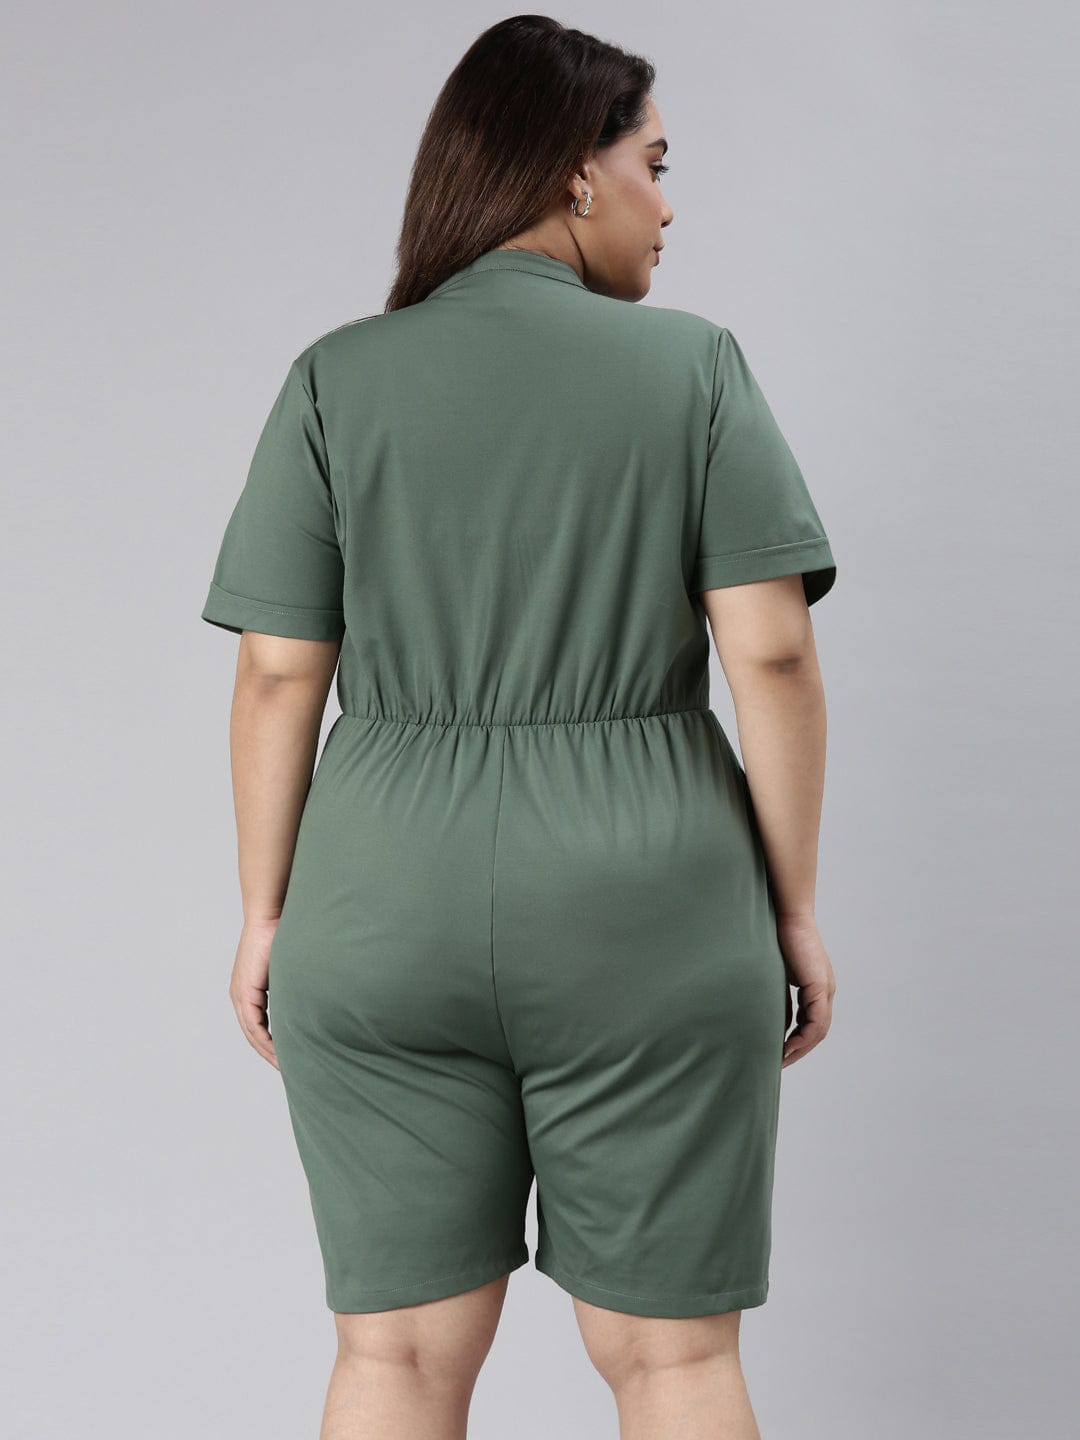 TheShaili - Women's Solid Turf green Knee length jumpsuit